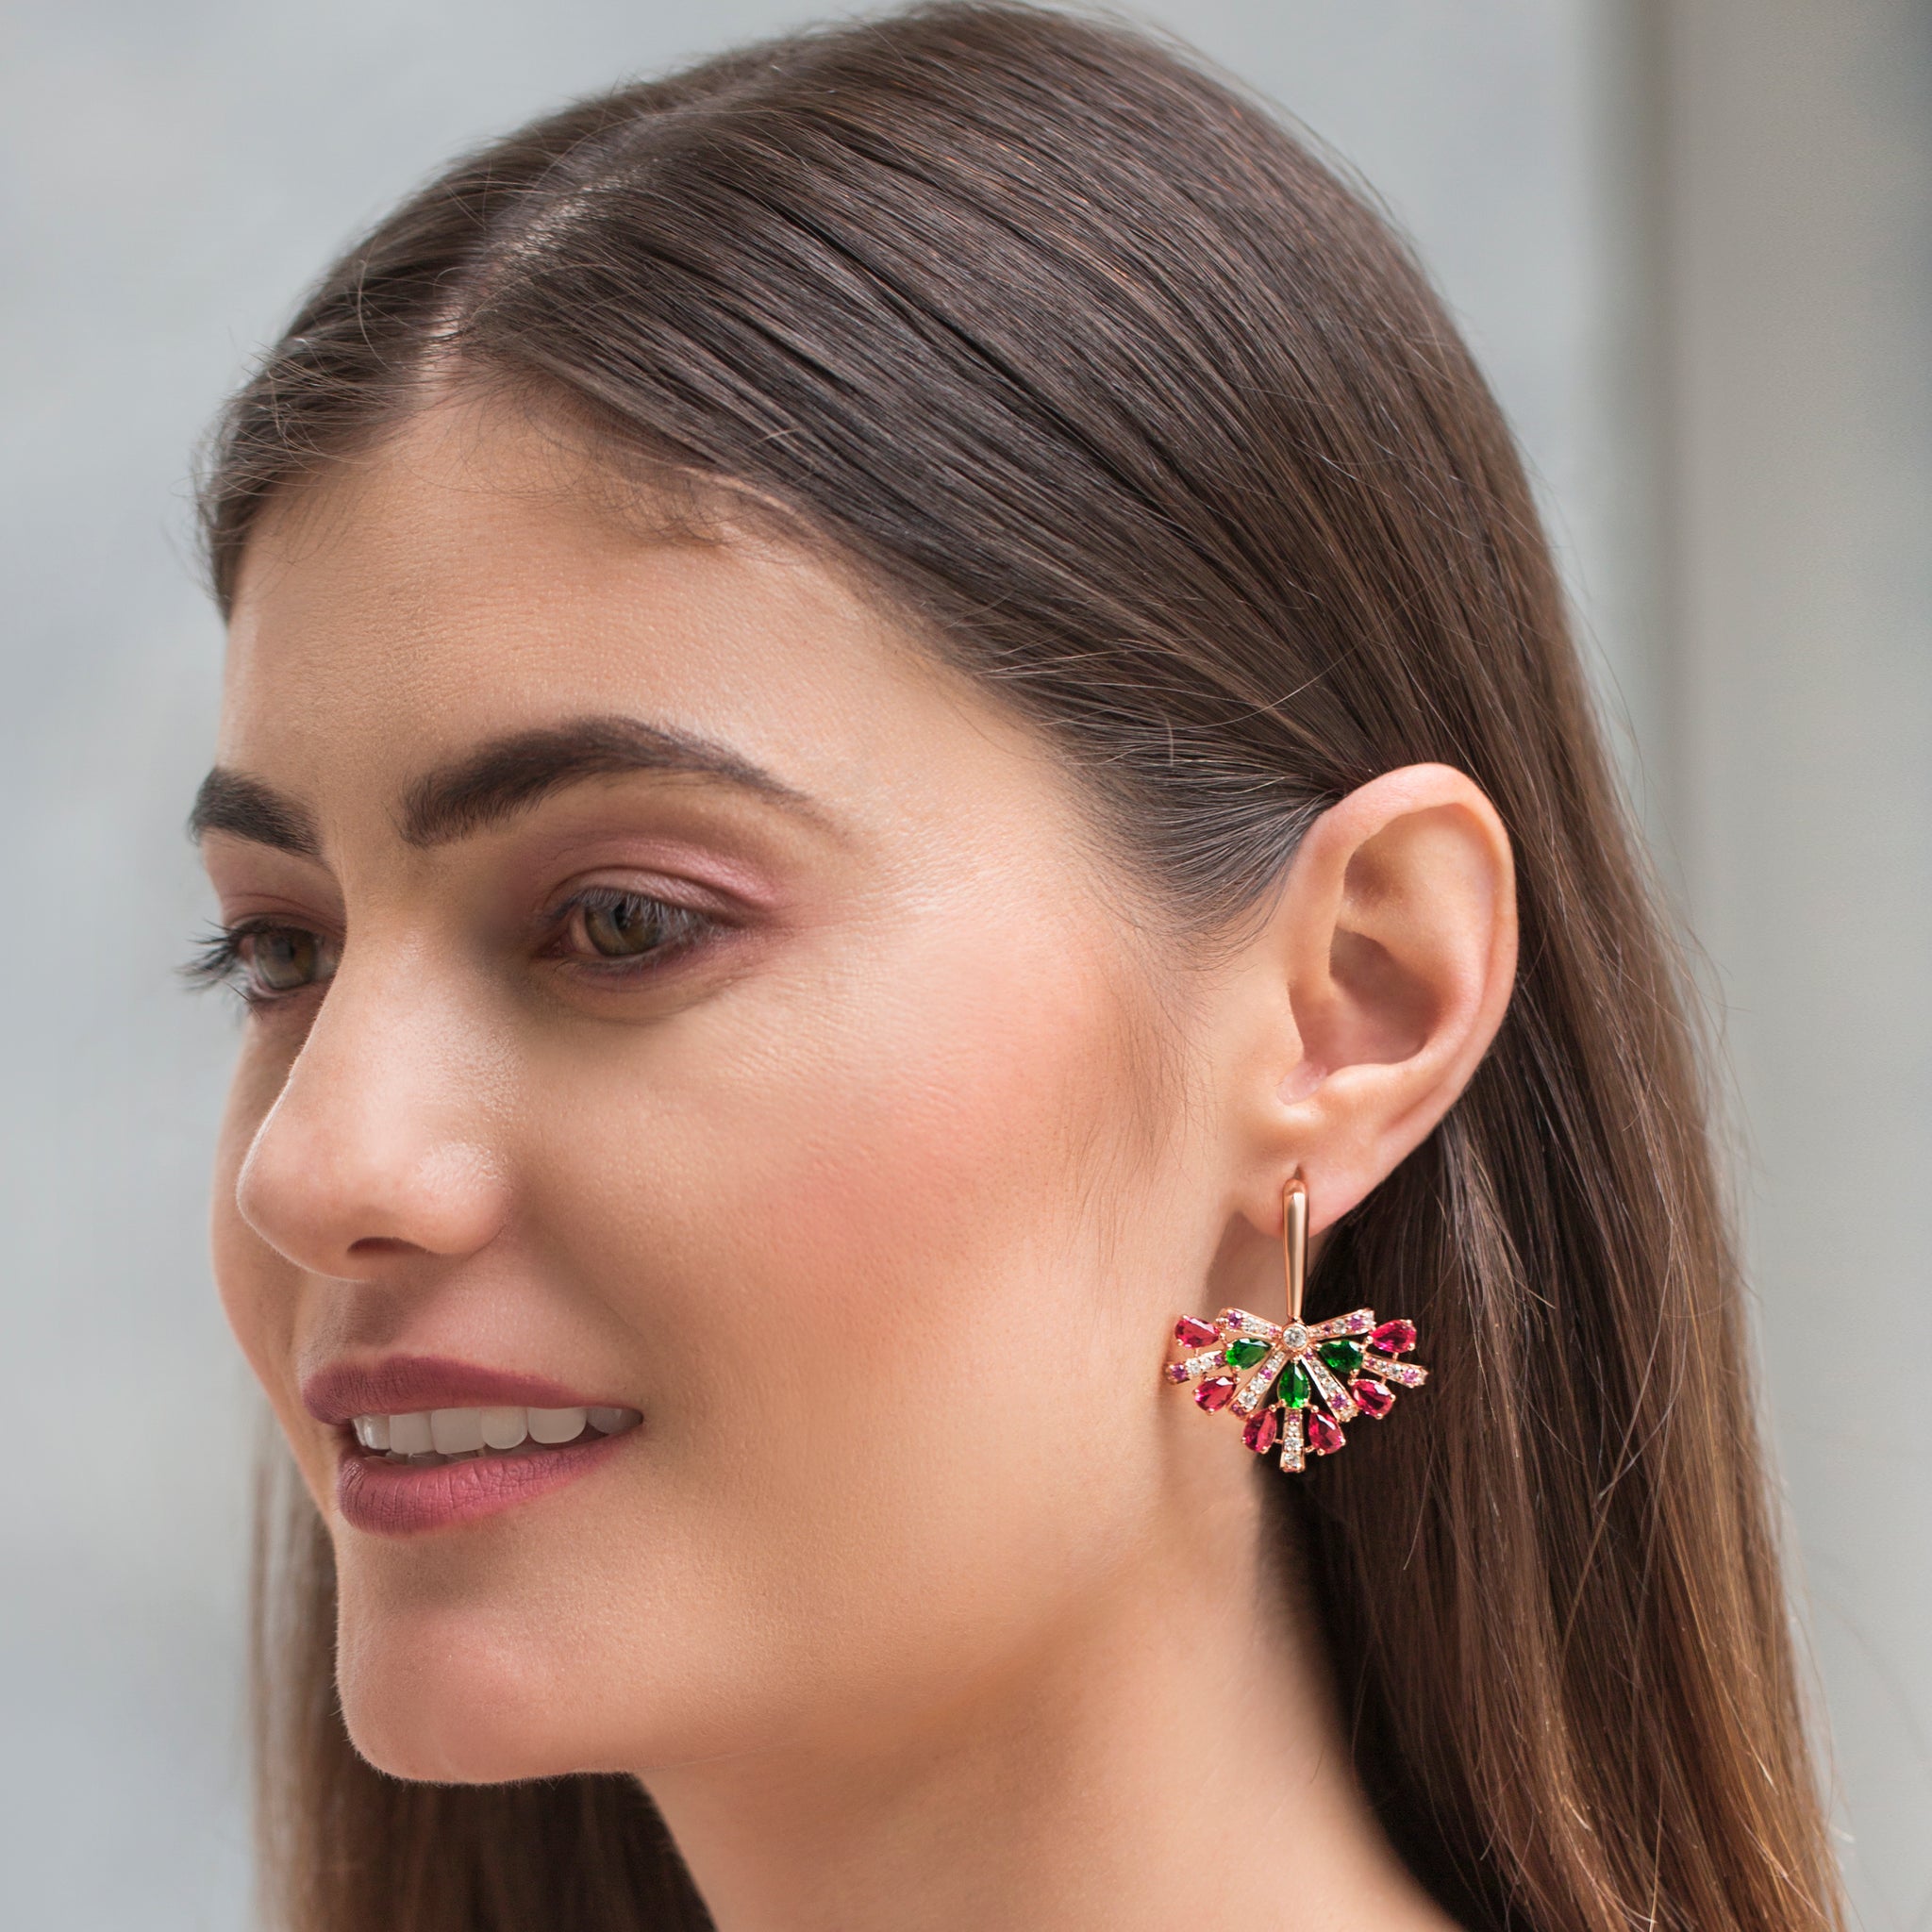 Exquisite Uptown Earrings - Pleasing Pink